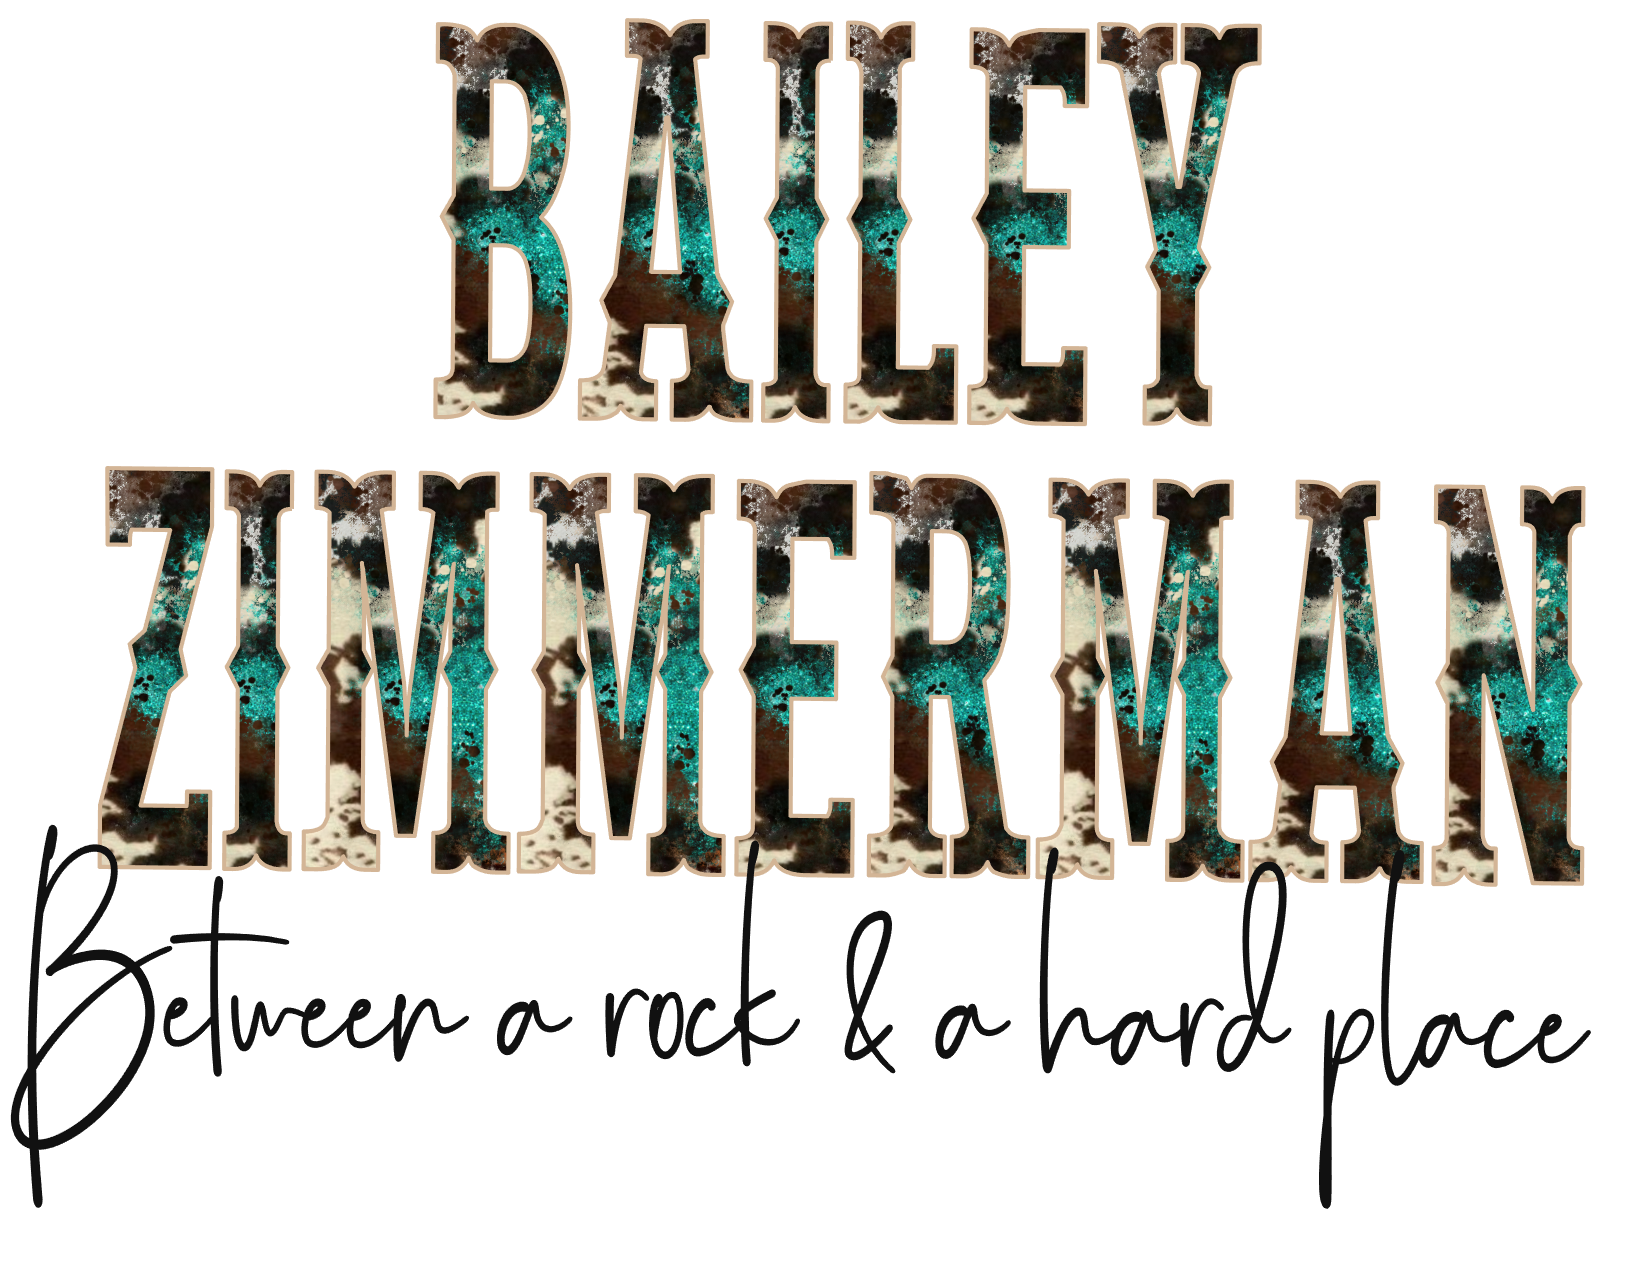 #219 Bailey Zimmerman Between a rock & a hard place